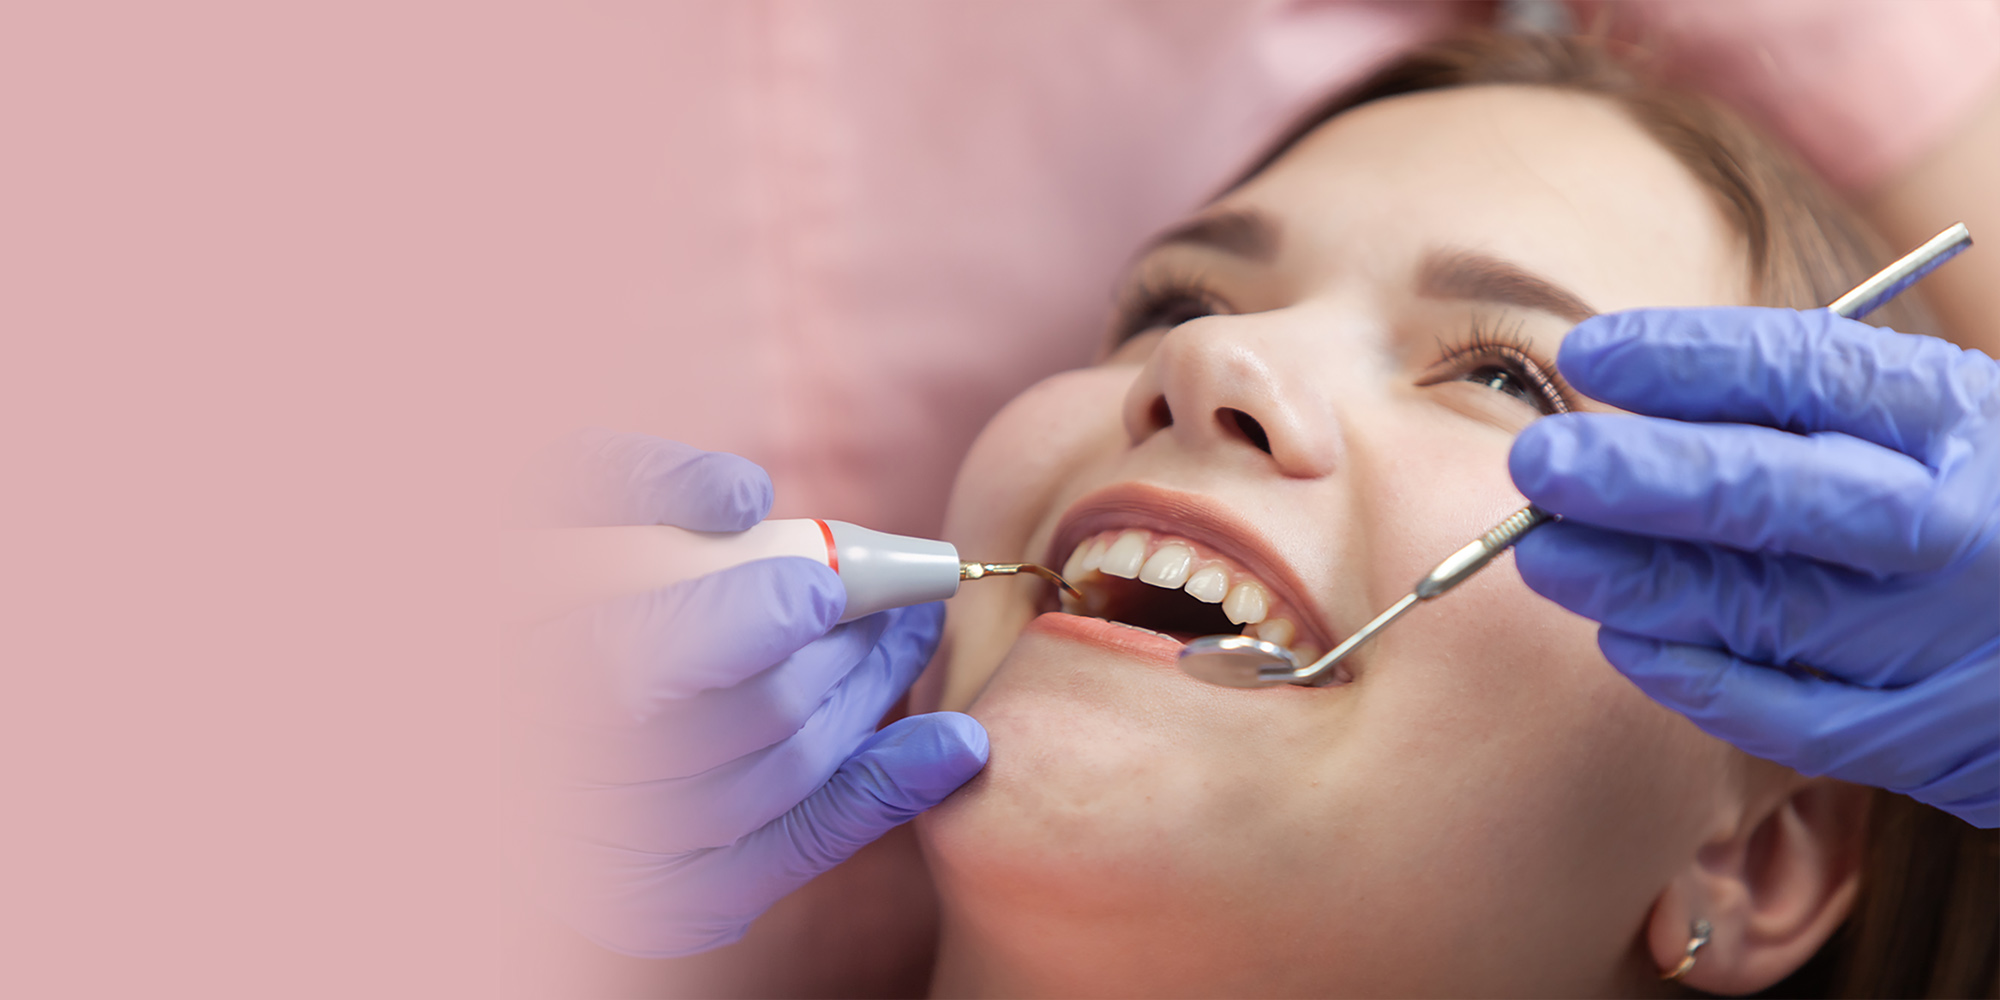 Dental patient undergoing dental examination before surgery